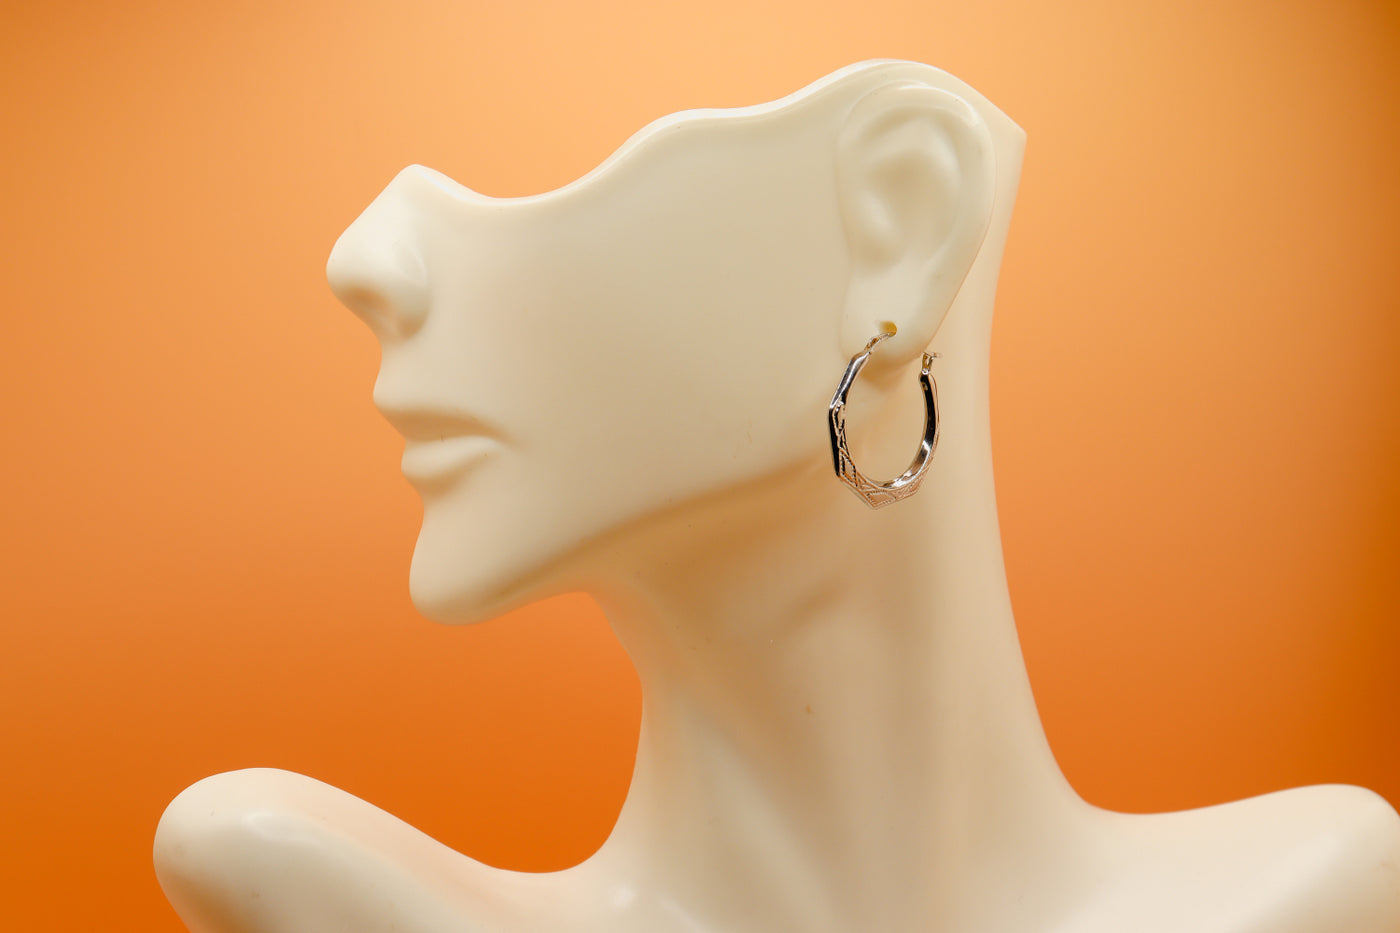 10K Gold Diamond Cut Hexagonal Hoop Earrings